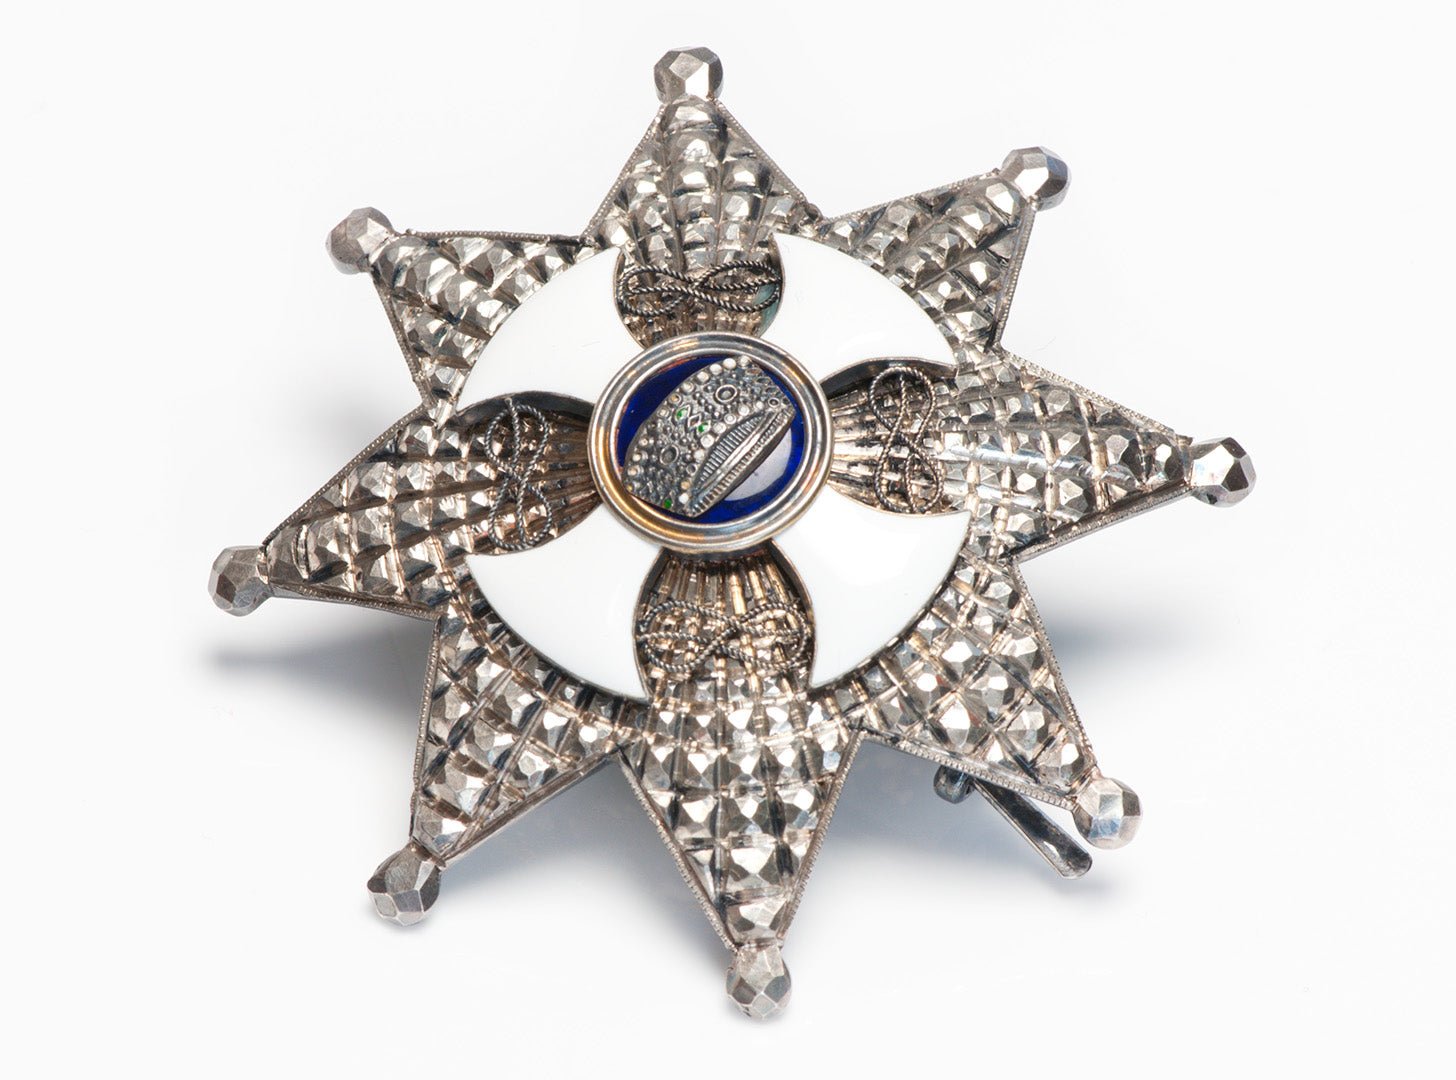 Royal Orders and Honors Silver Enamel Brooch Pin